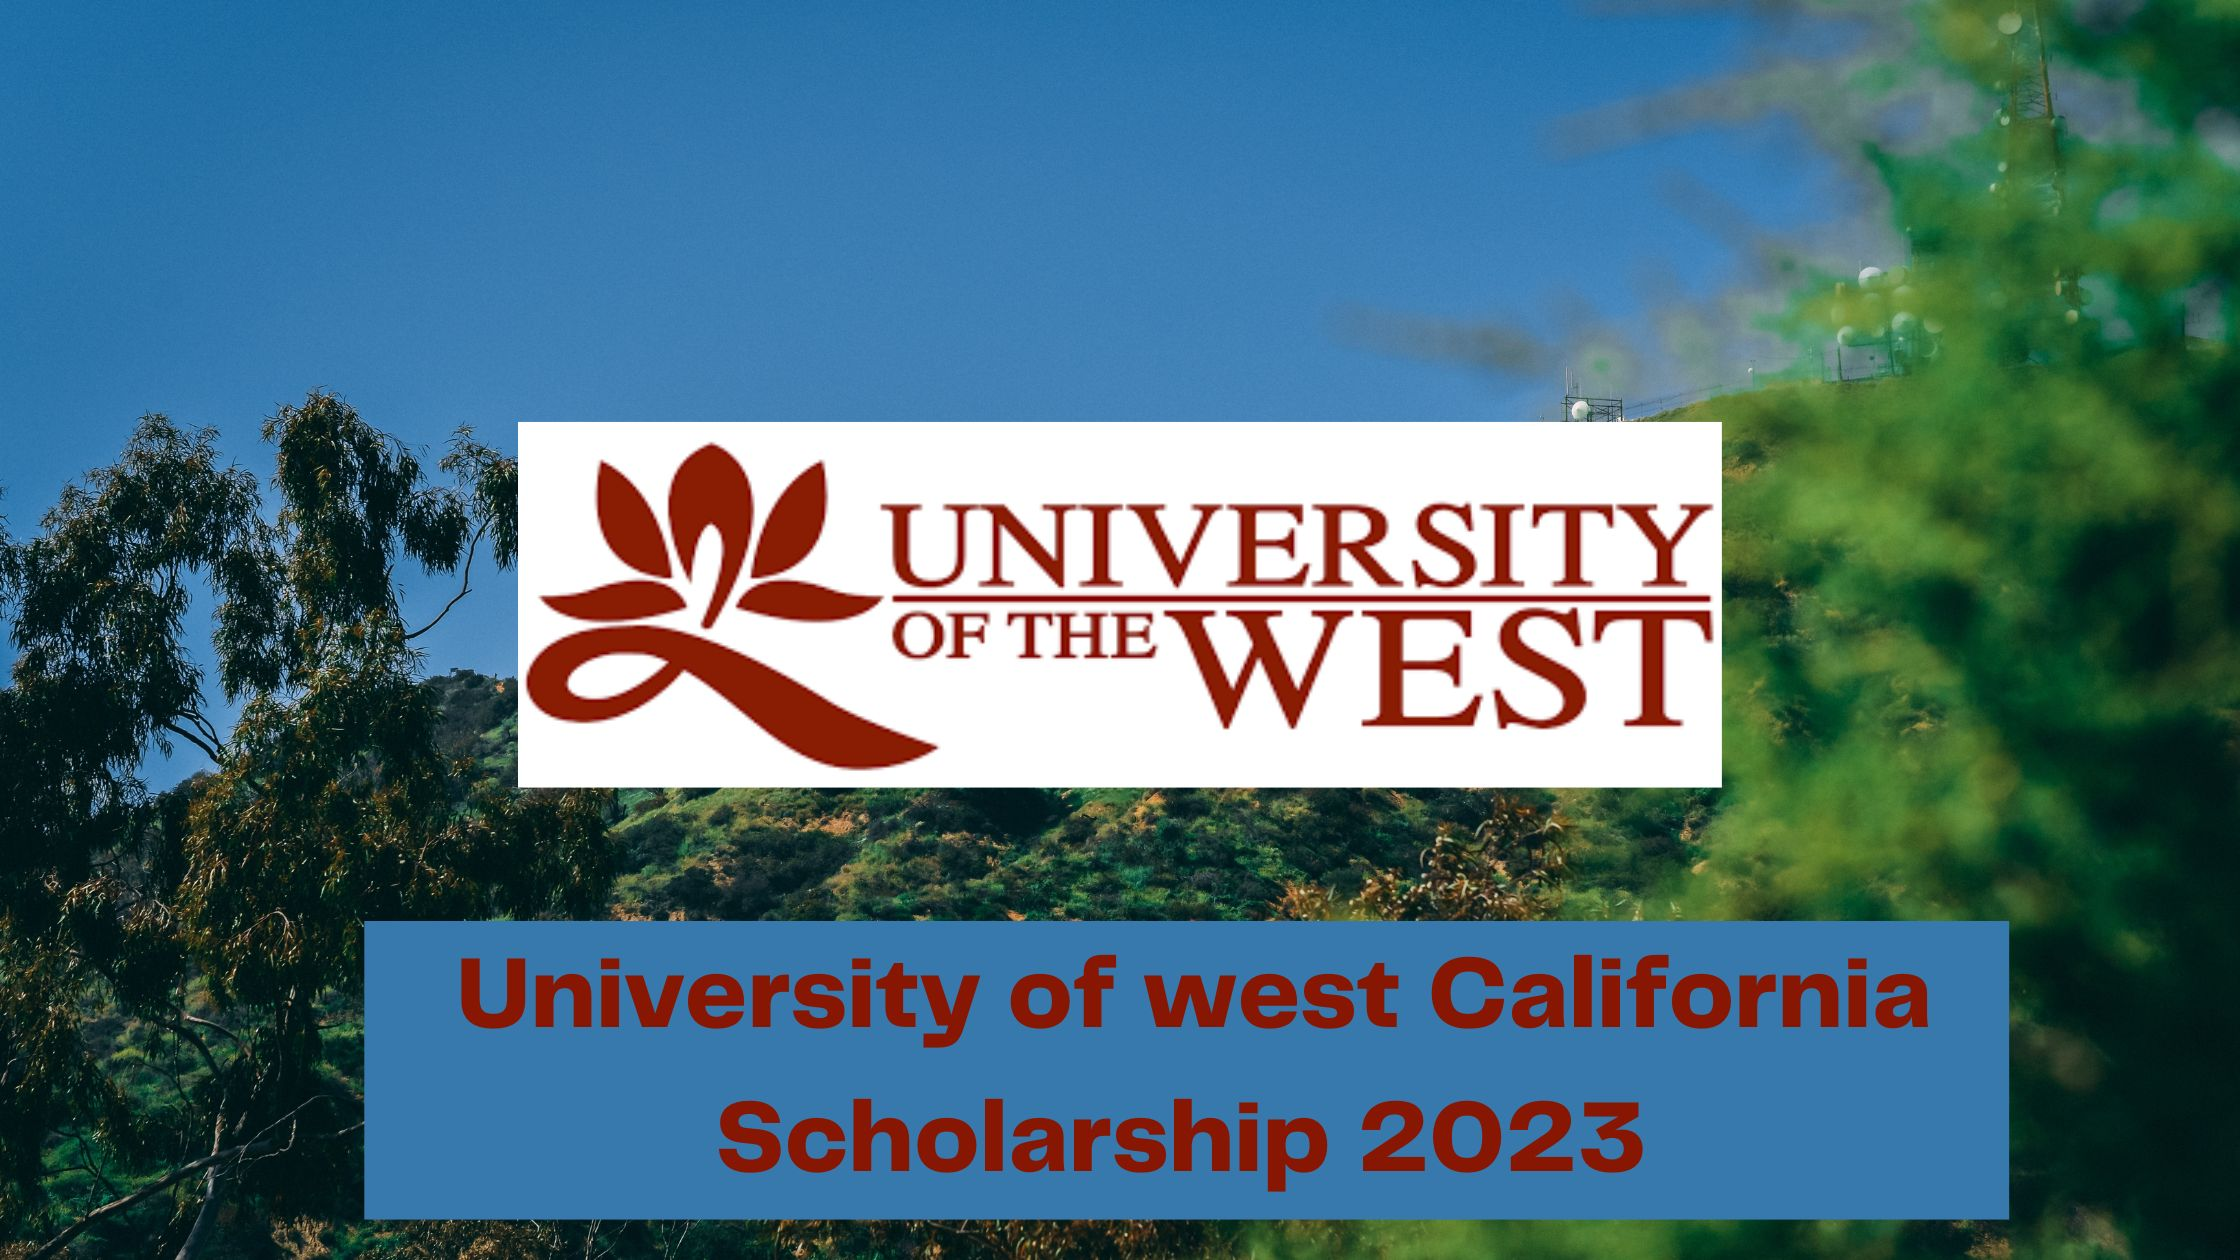 University of west California Scholarship 2023